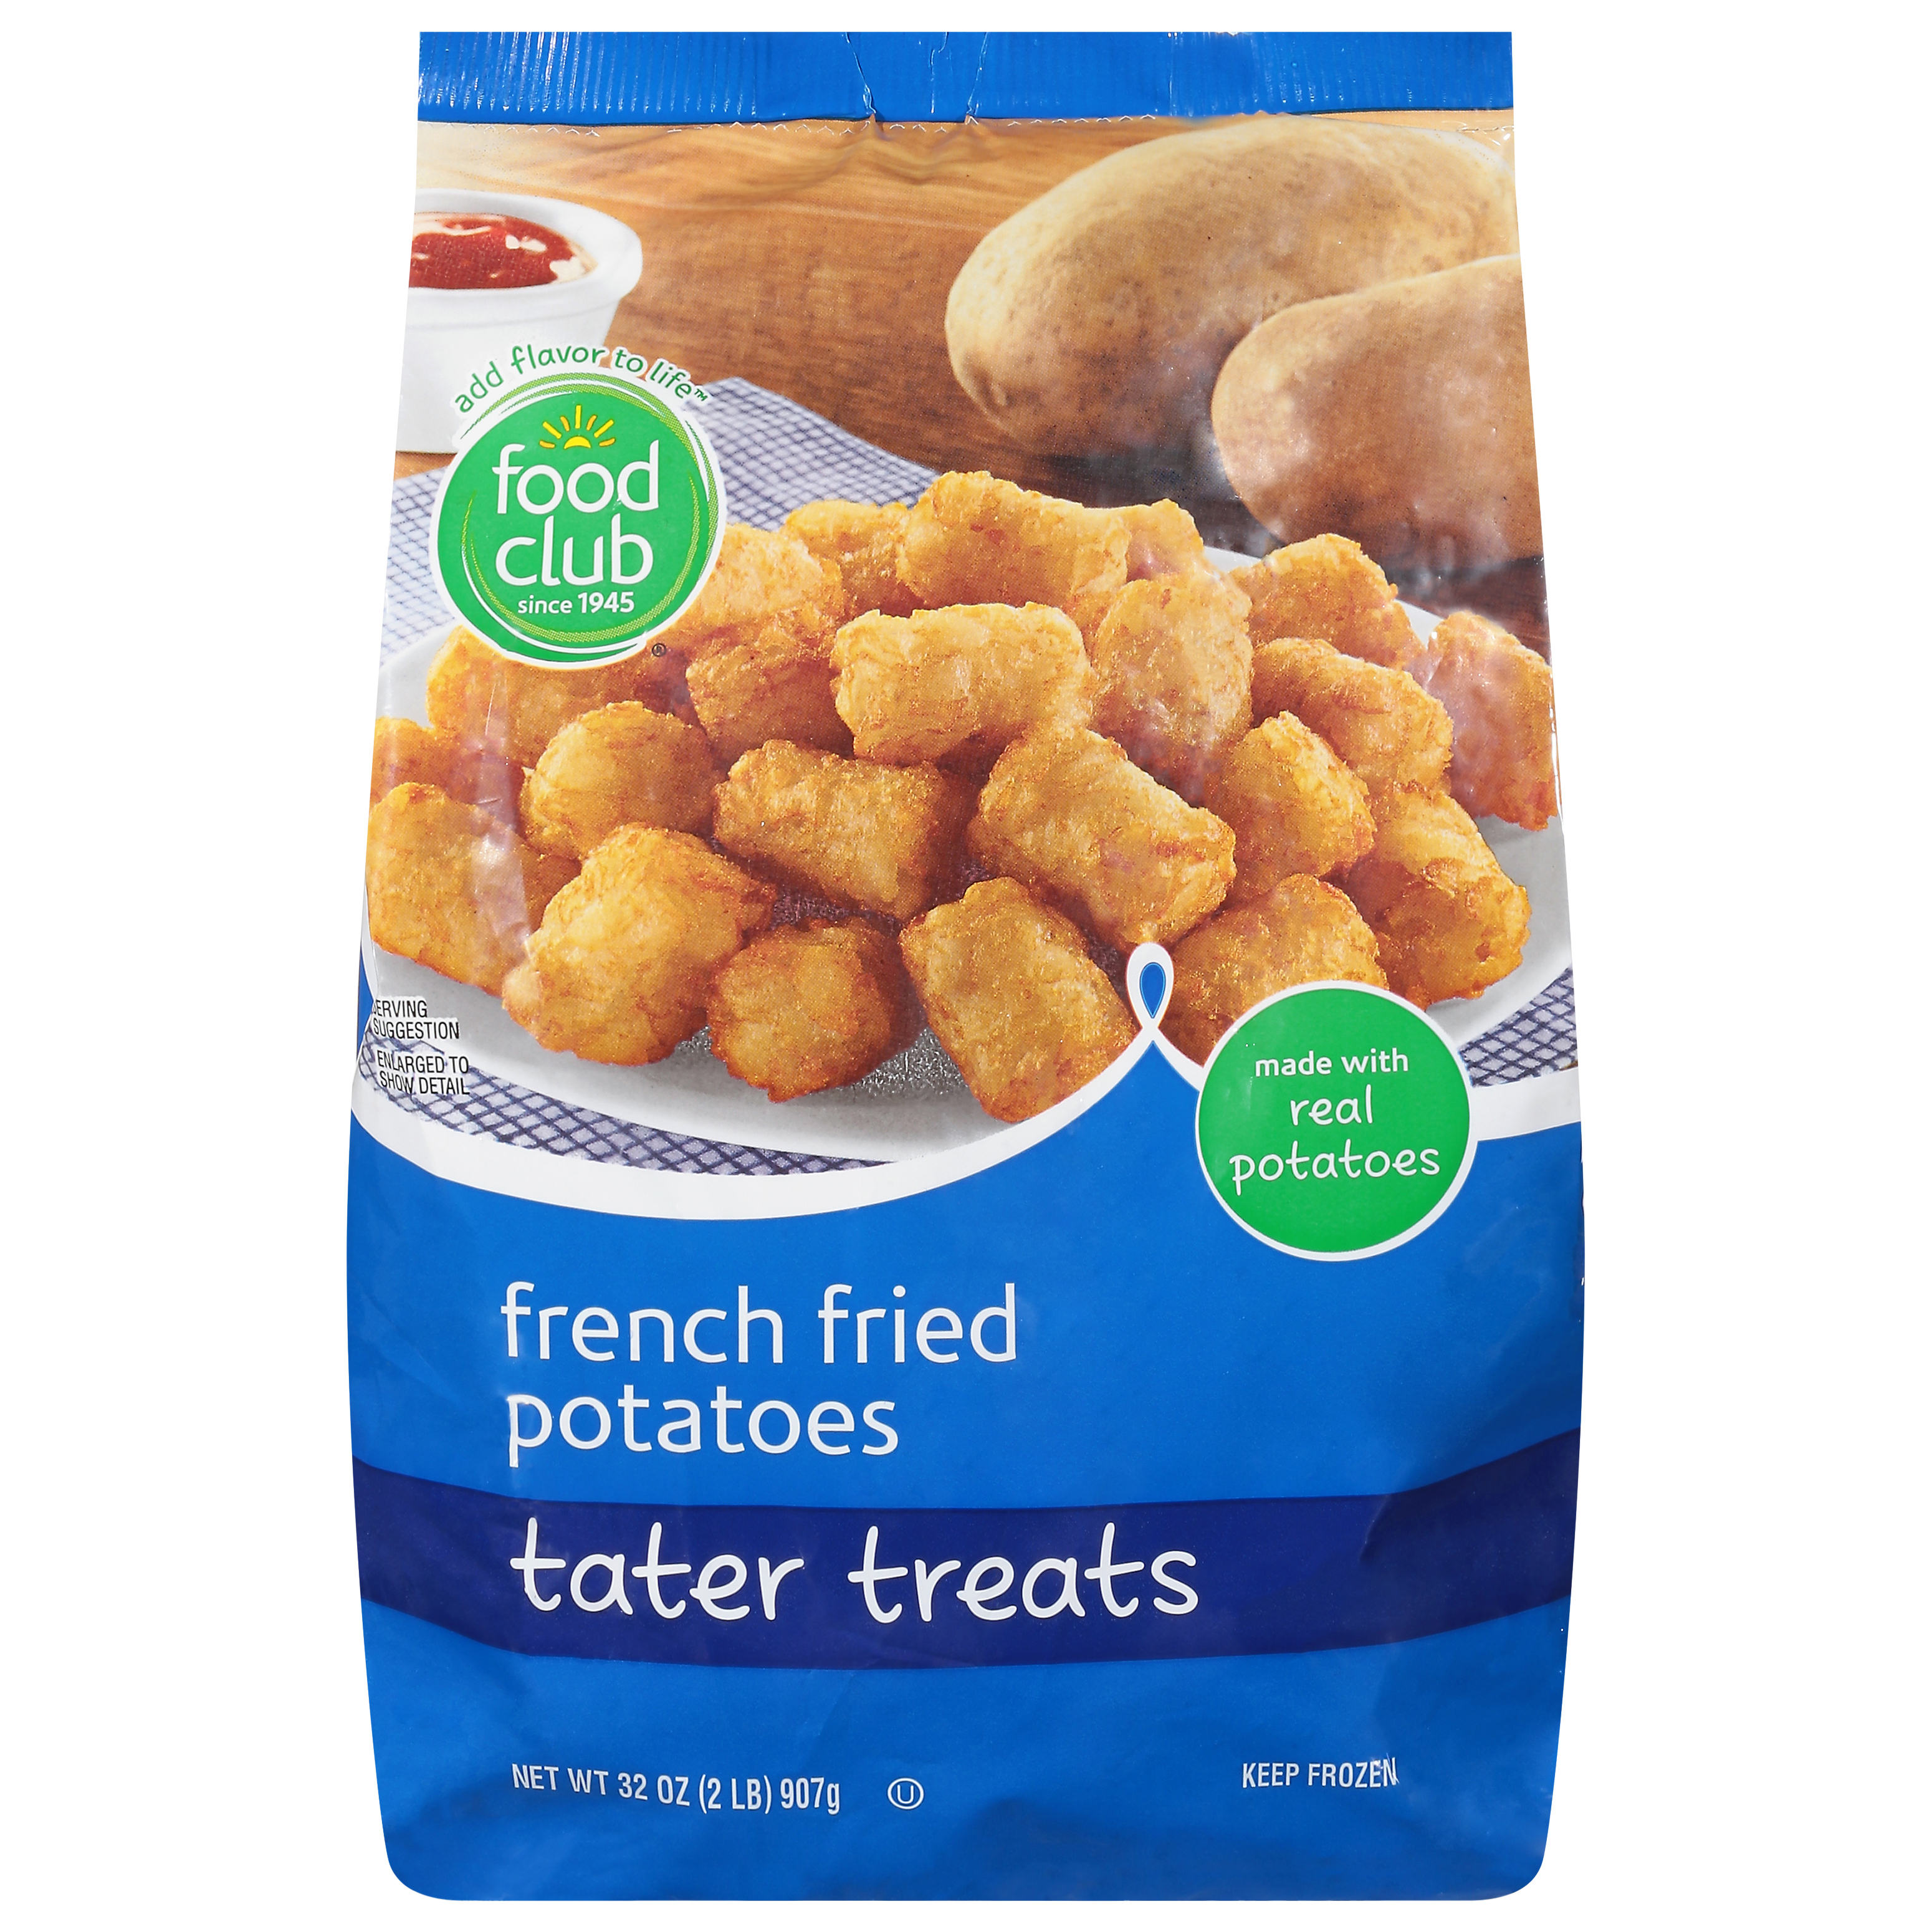 Food Club - Food Club, Crinkle Cut French Fried Potatoes (32 oz